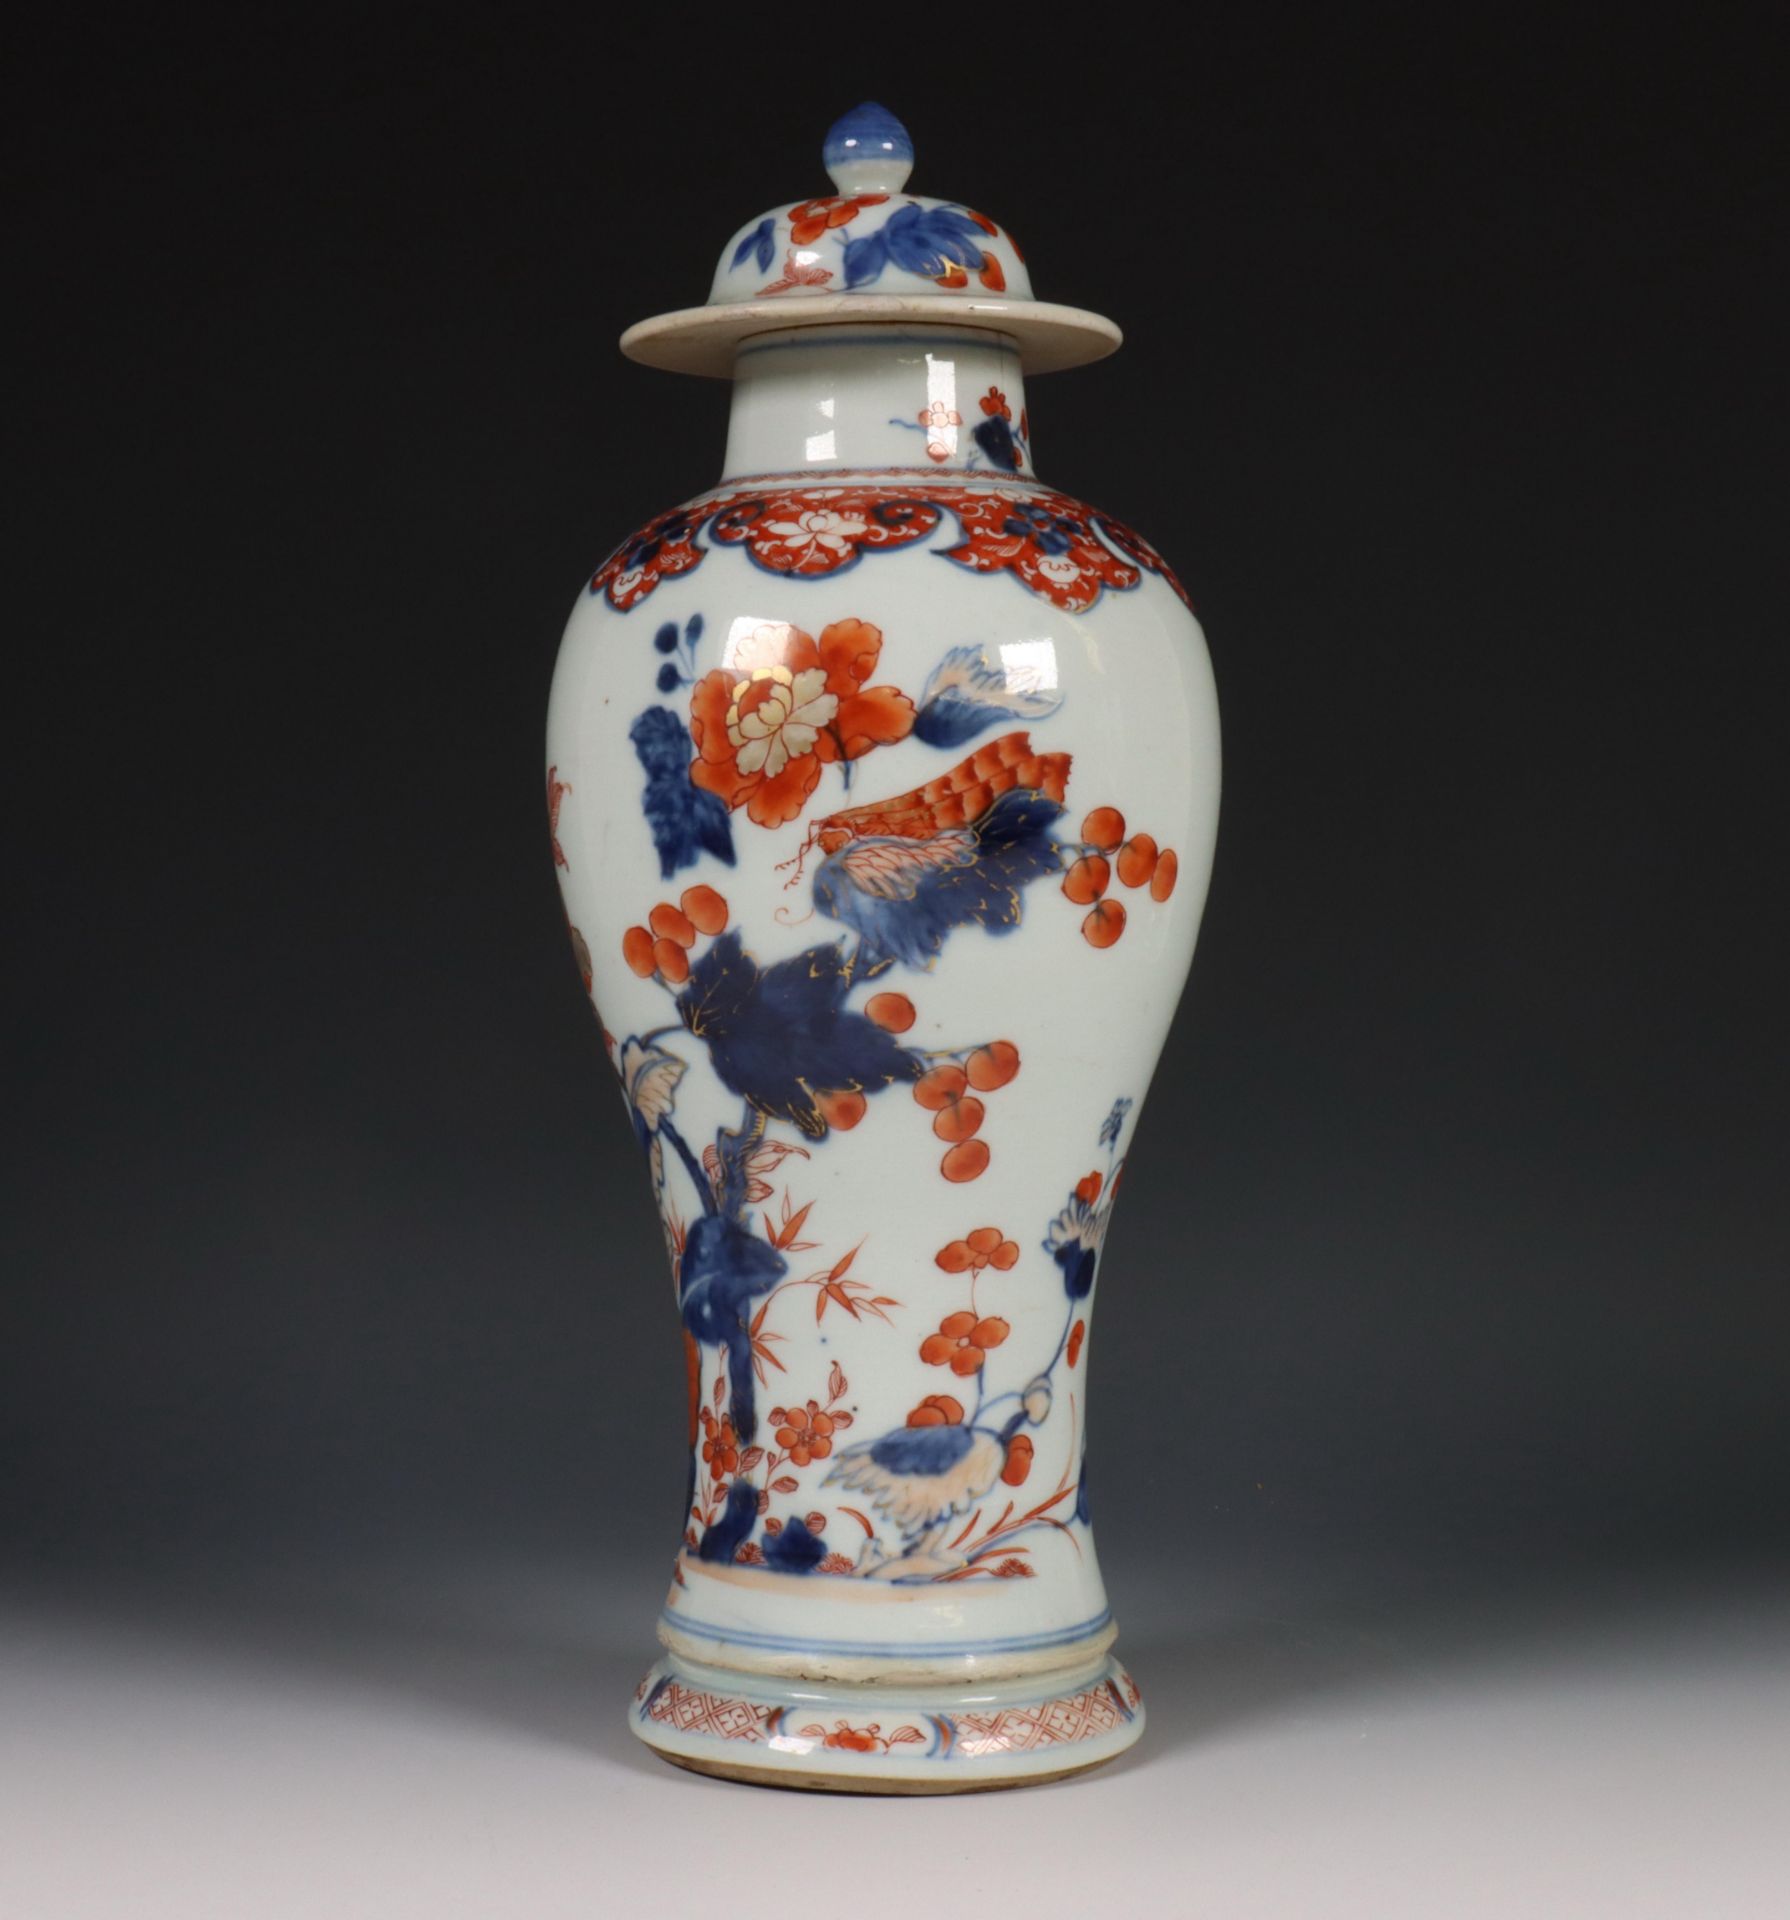 China, Imari porcelain vase and cover, 18th century,